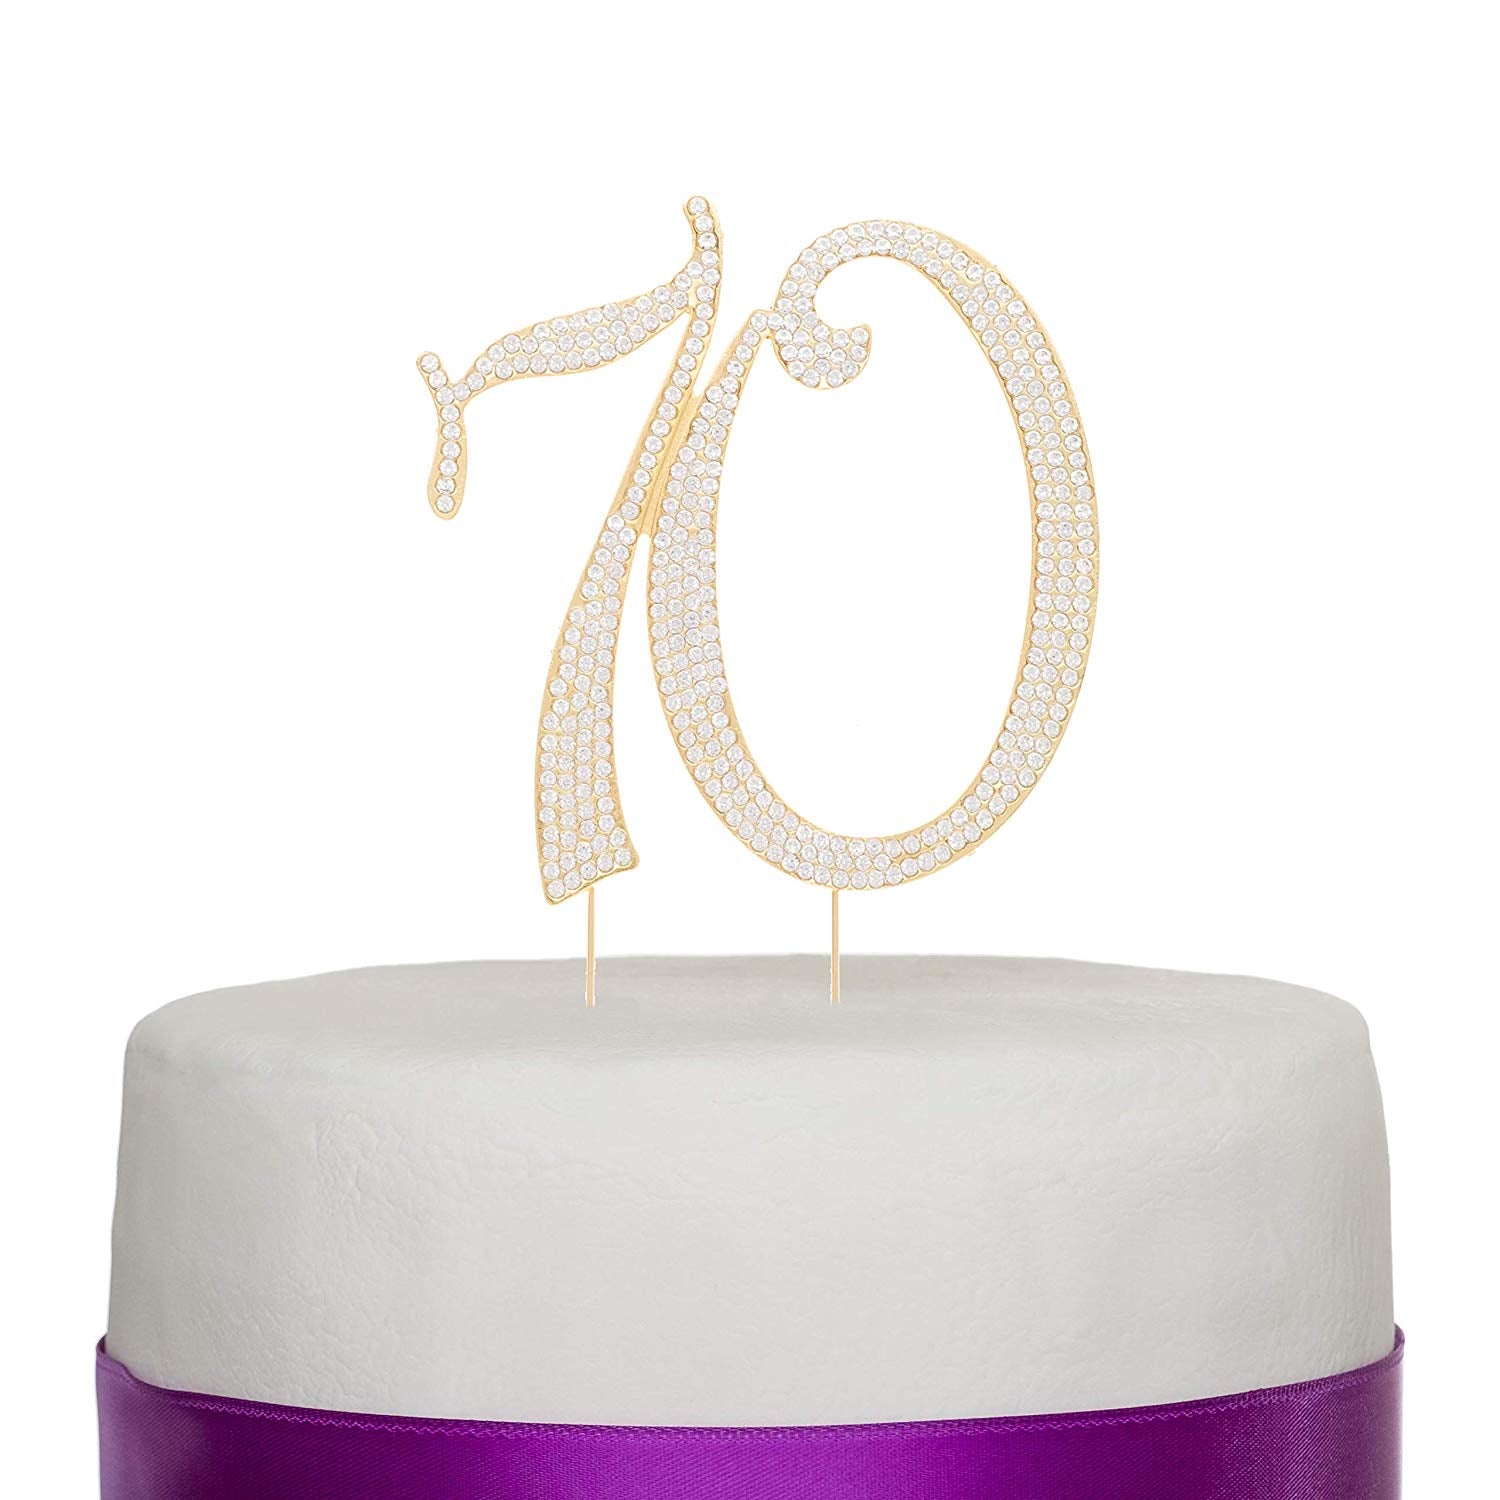 ChocaL8kiss - 70th birthday sheet cake with memories all around.  #ChocaL8kiss #customcake #buttercream #birthday #birthdaycake #cakes  #sheetcake | Facebook